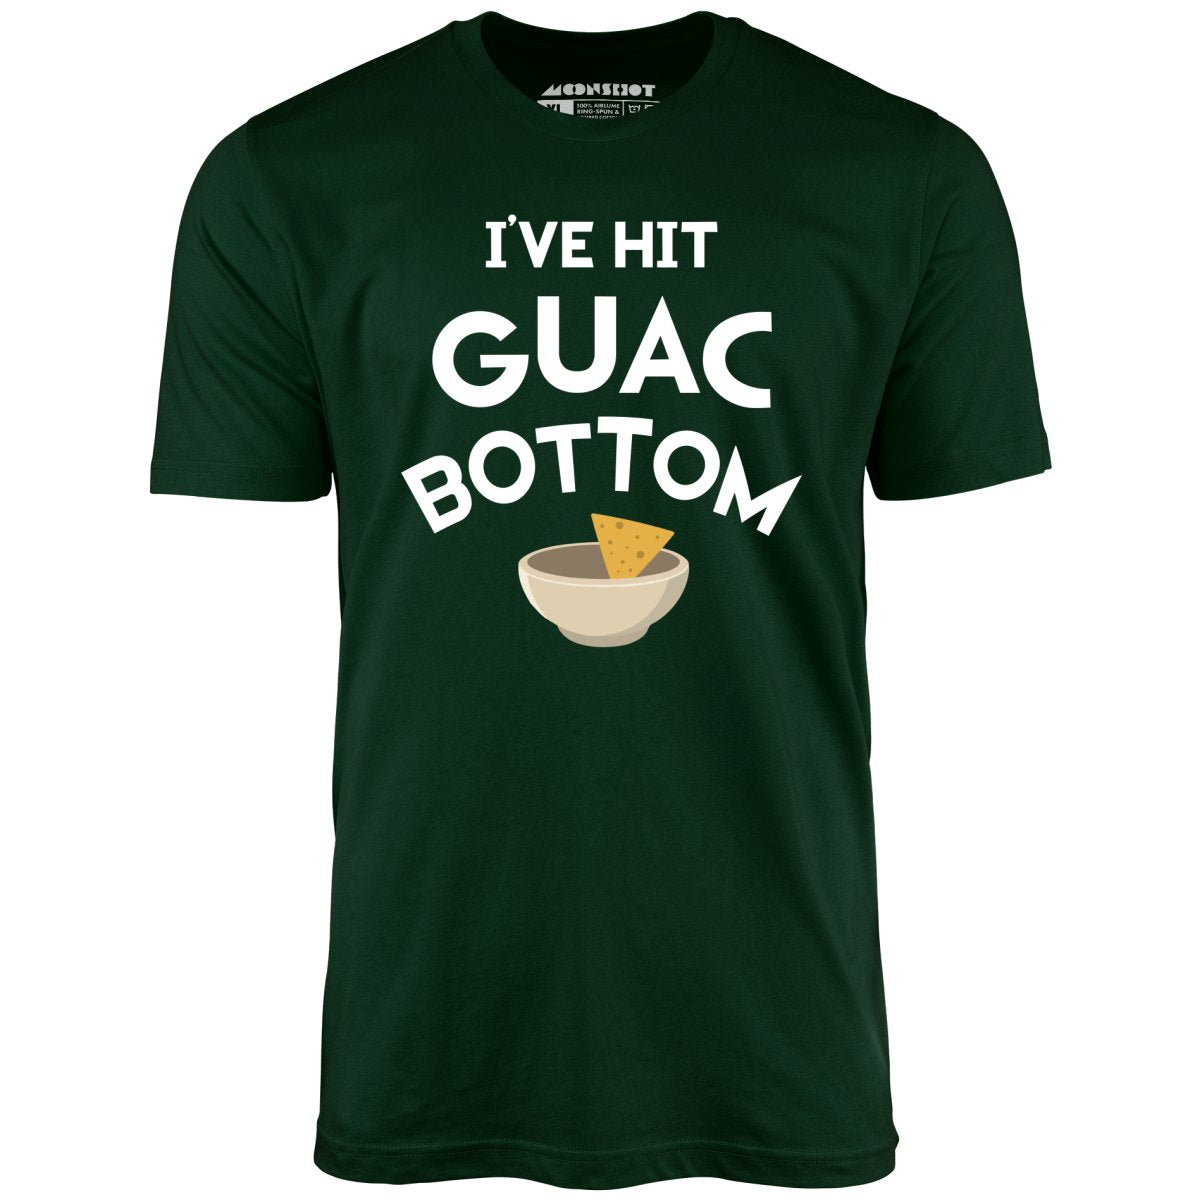 I've Hit Guac Bottom - Unisex T-Shirt